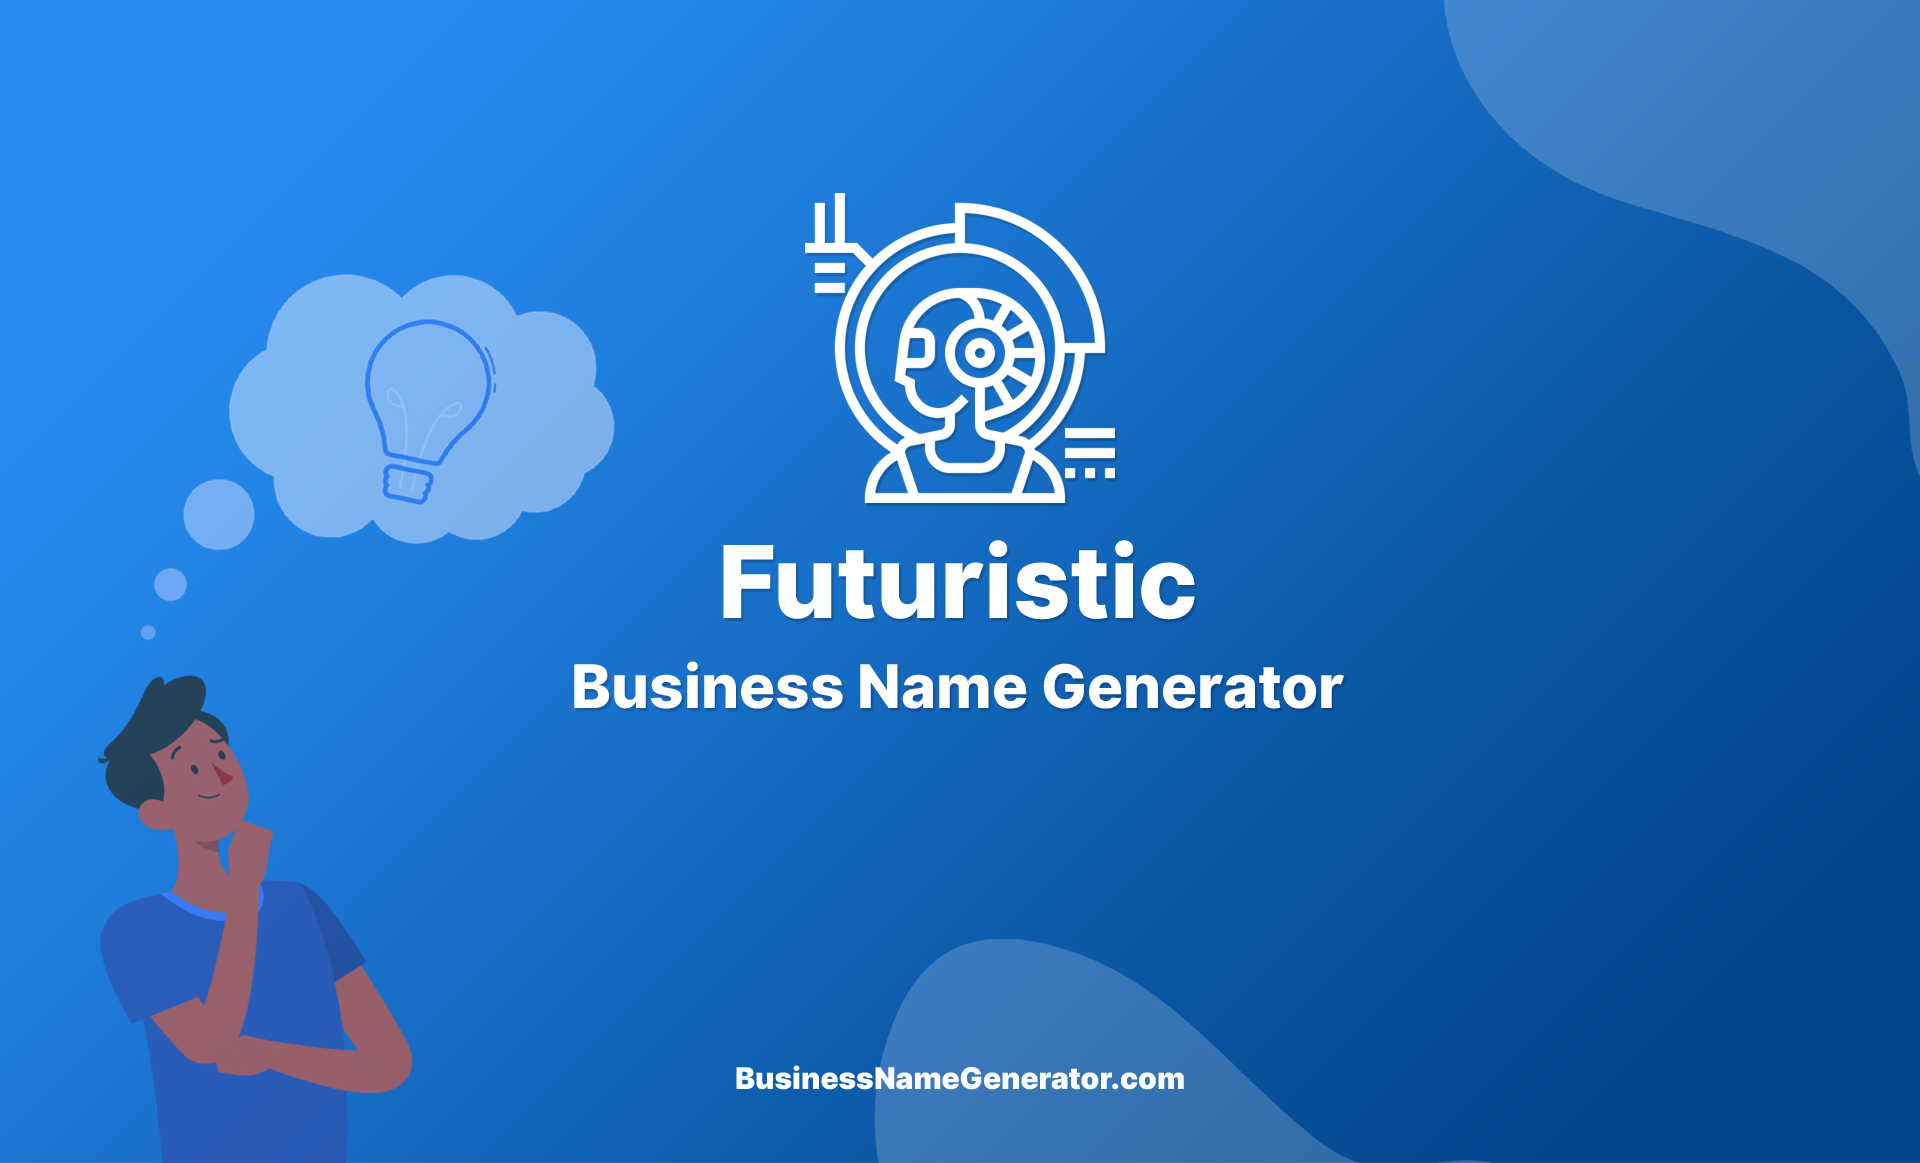 Futuristic Business Name Generator